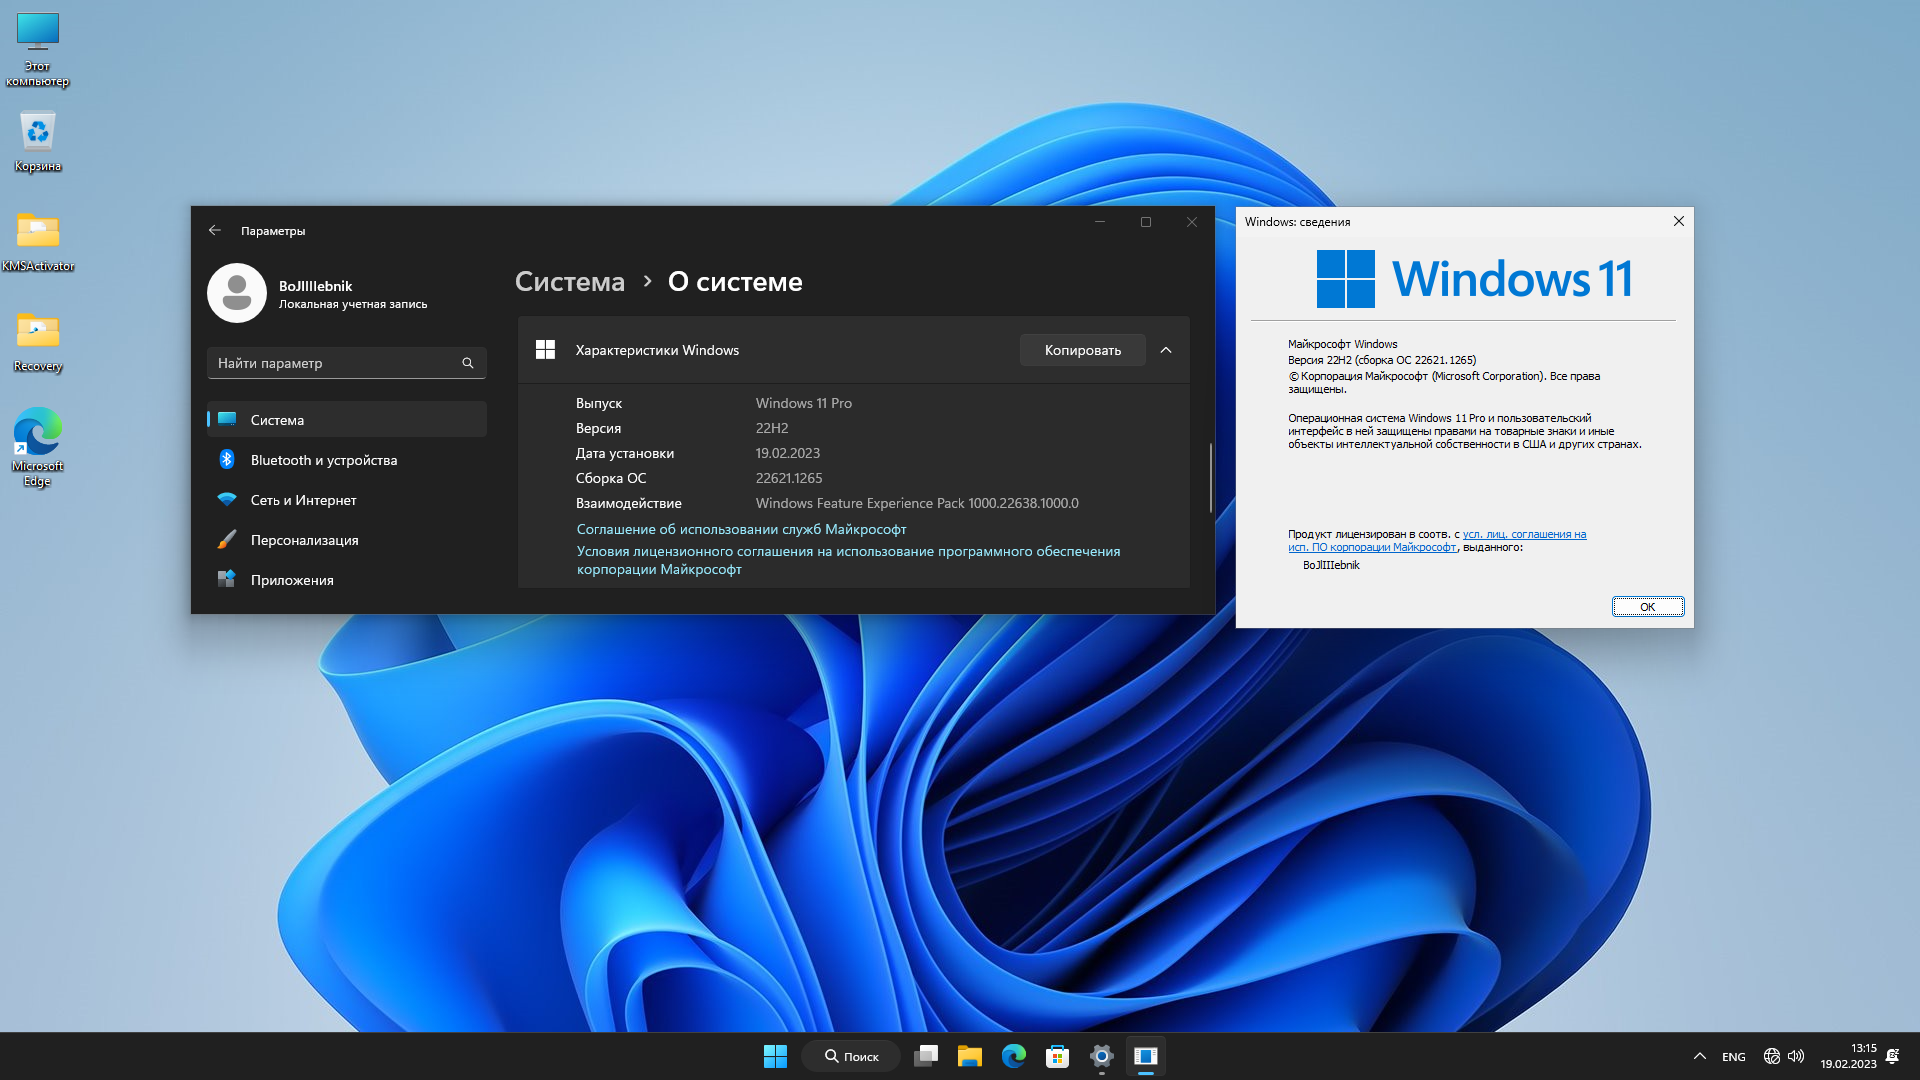 Windows 11 Pro 22H2 (build 22621.1265) x64 by BoJlIIIebnik [RU]